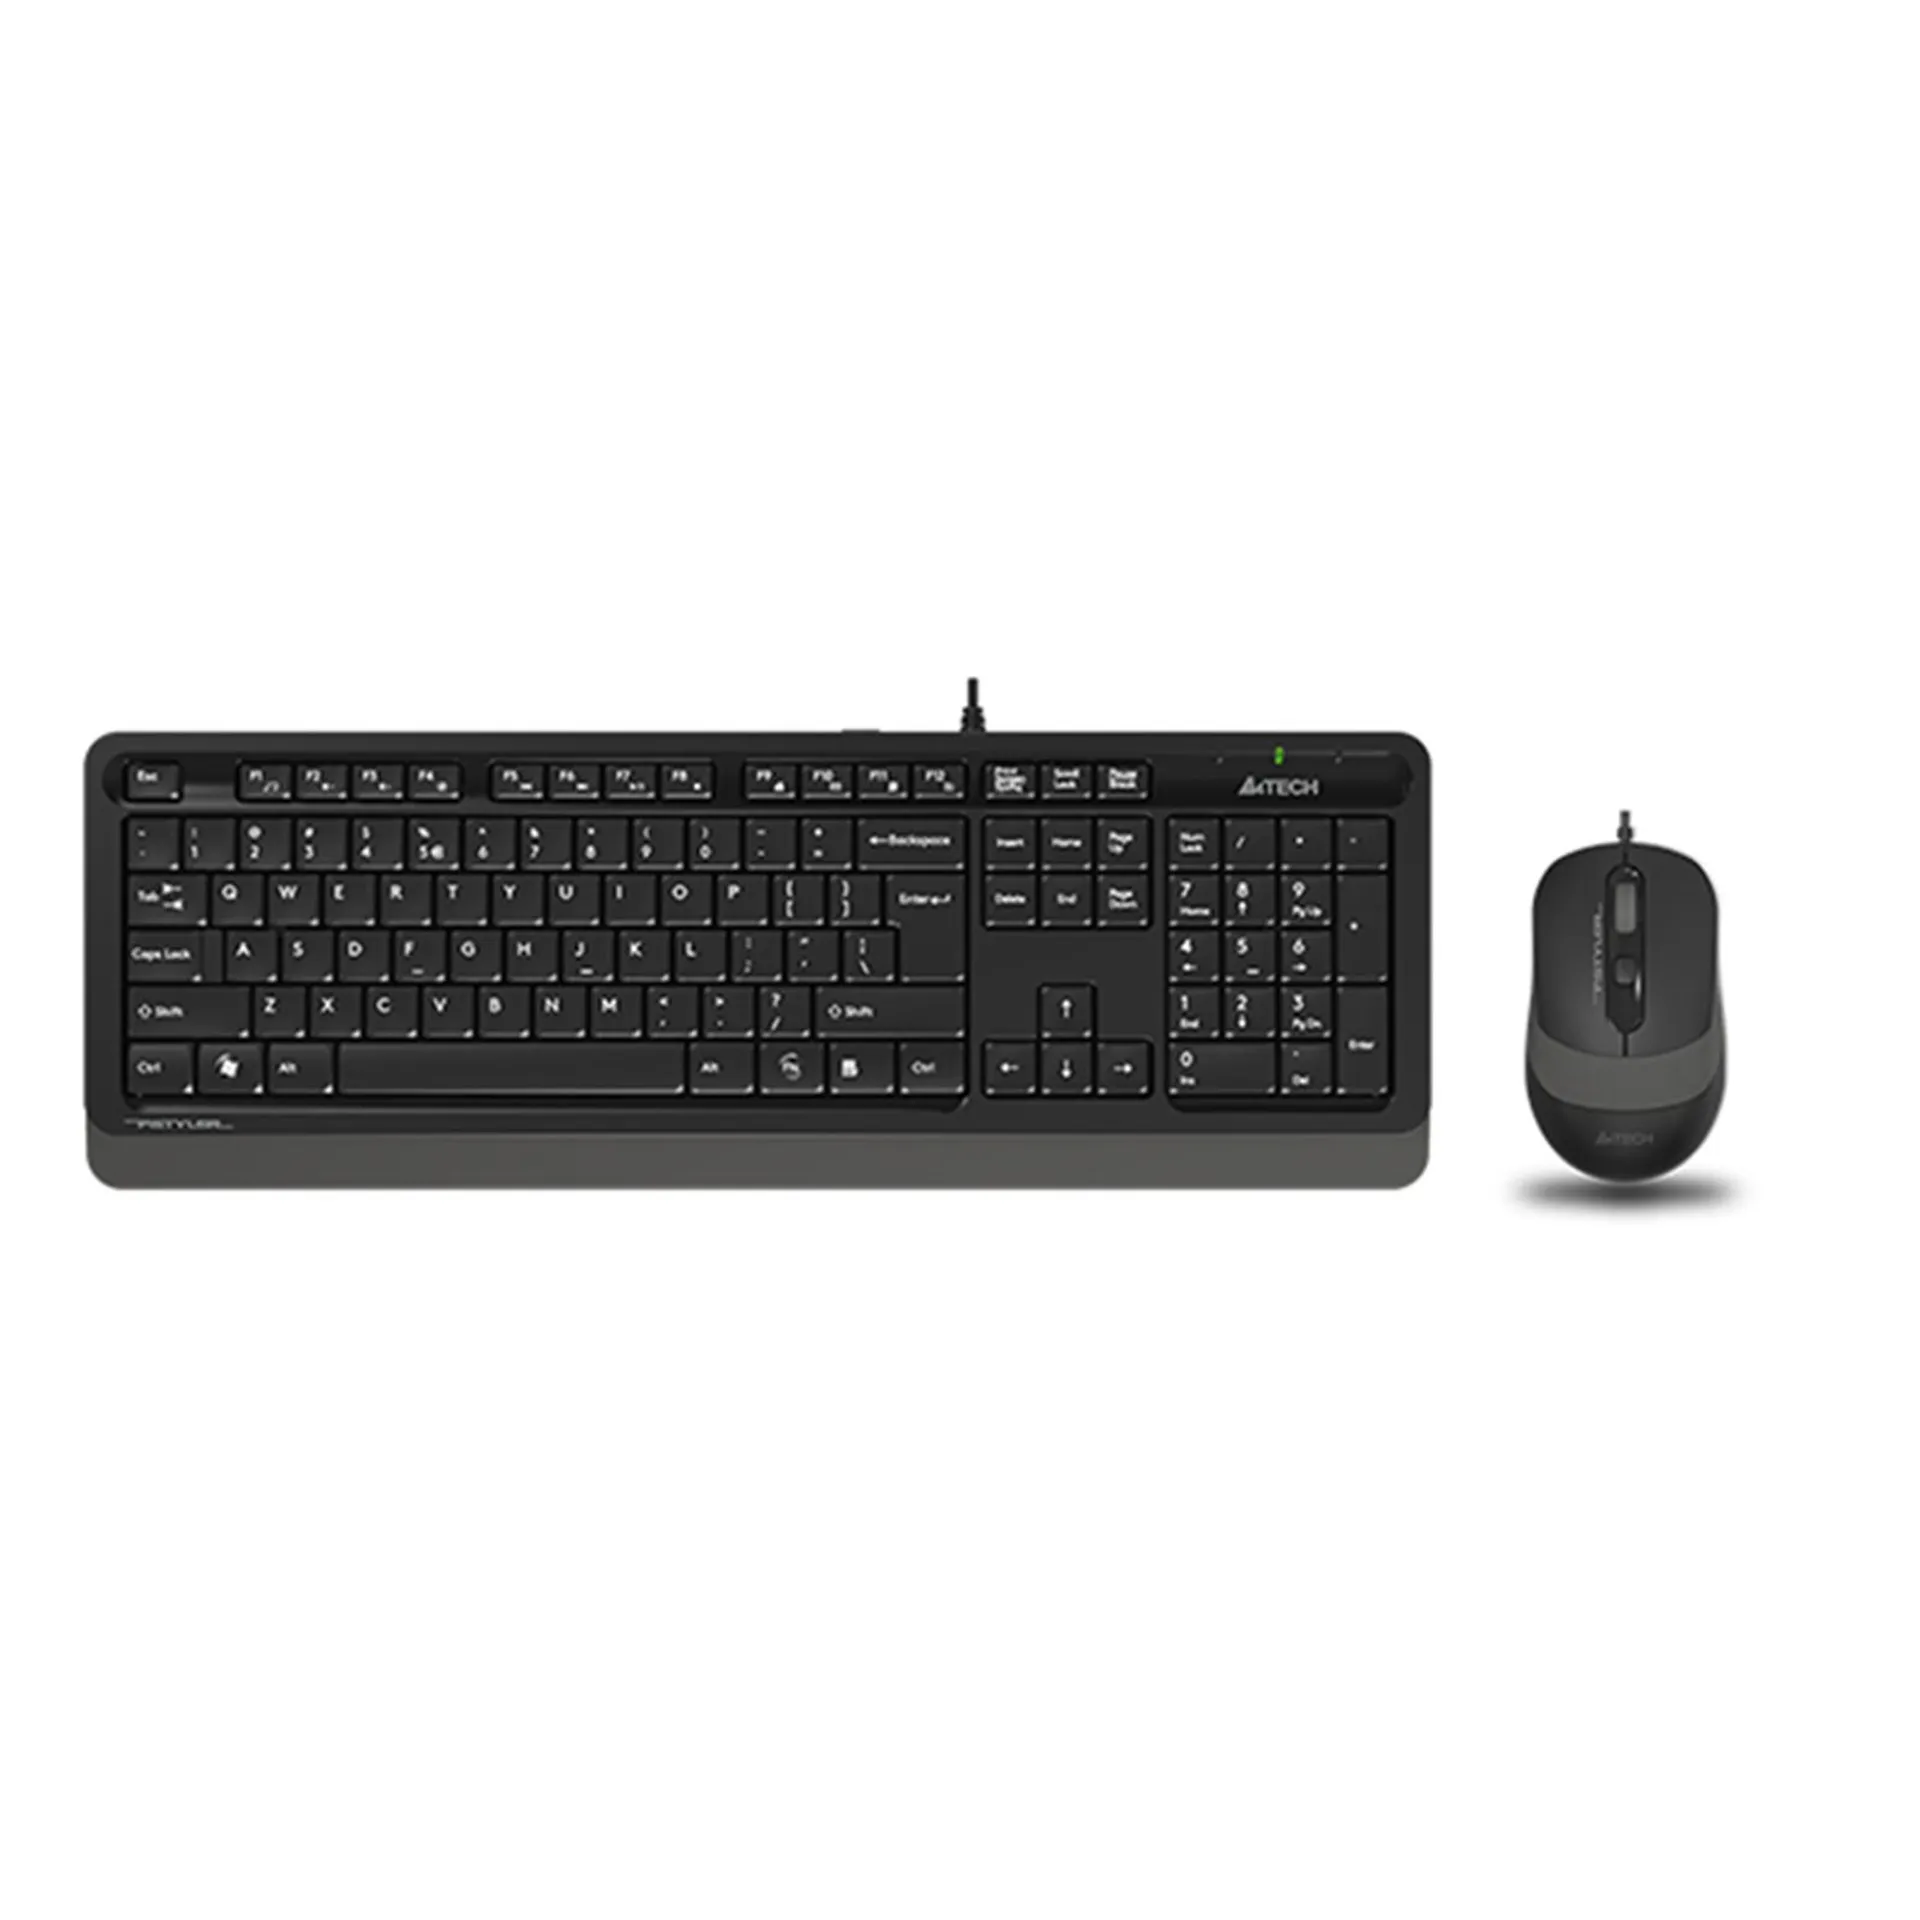 A4Tech Fstyler F1010 Multimedia Keyboard & Mouse Combo